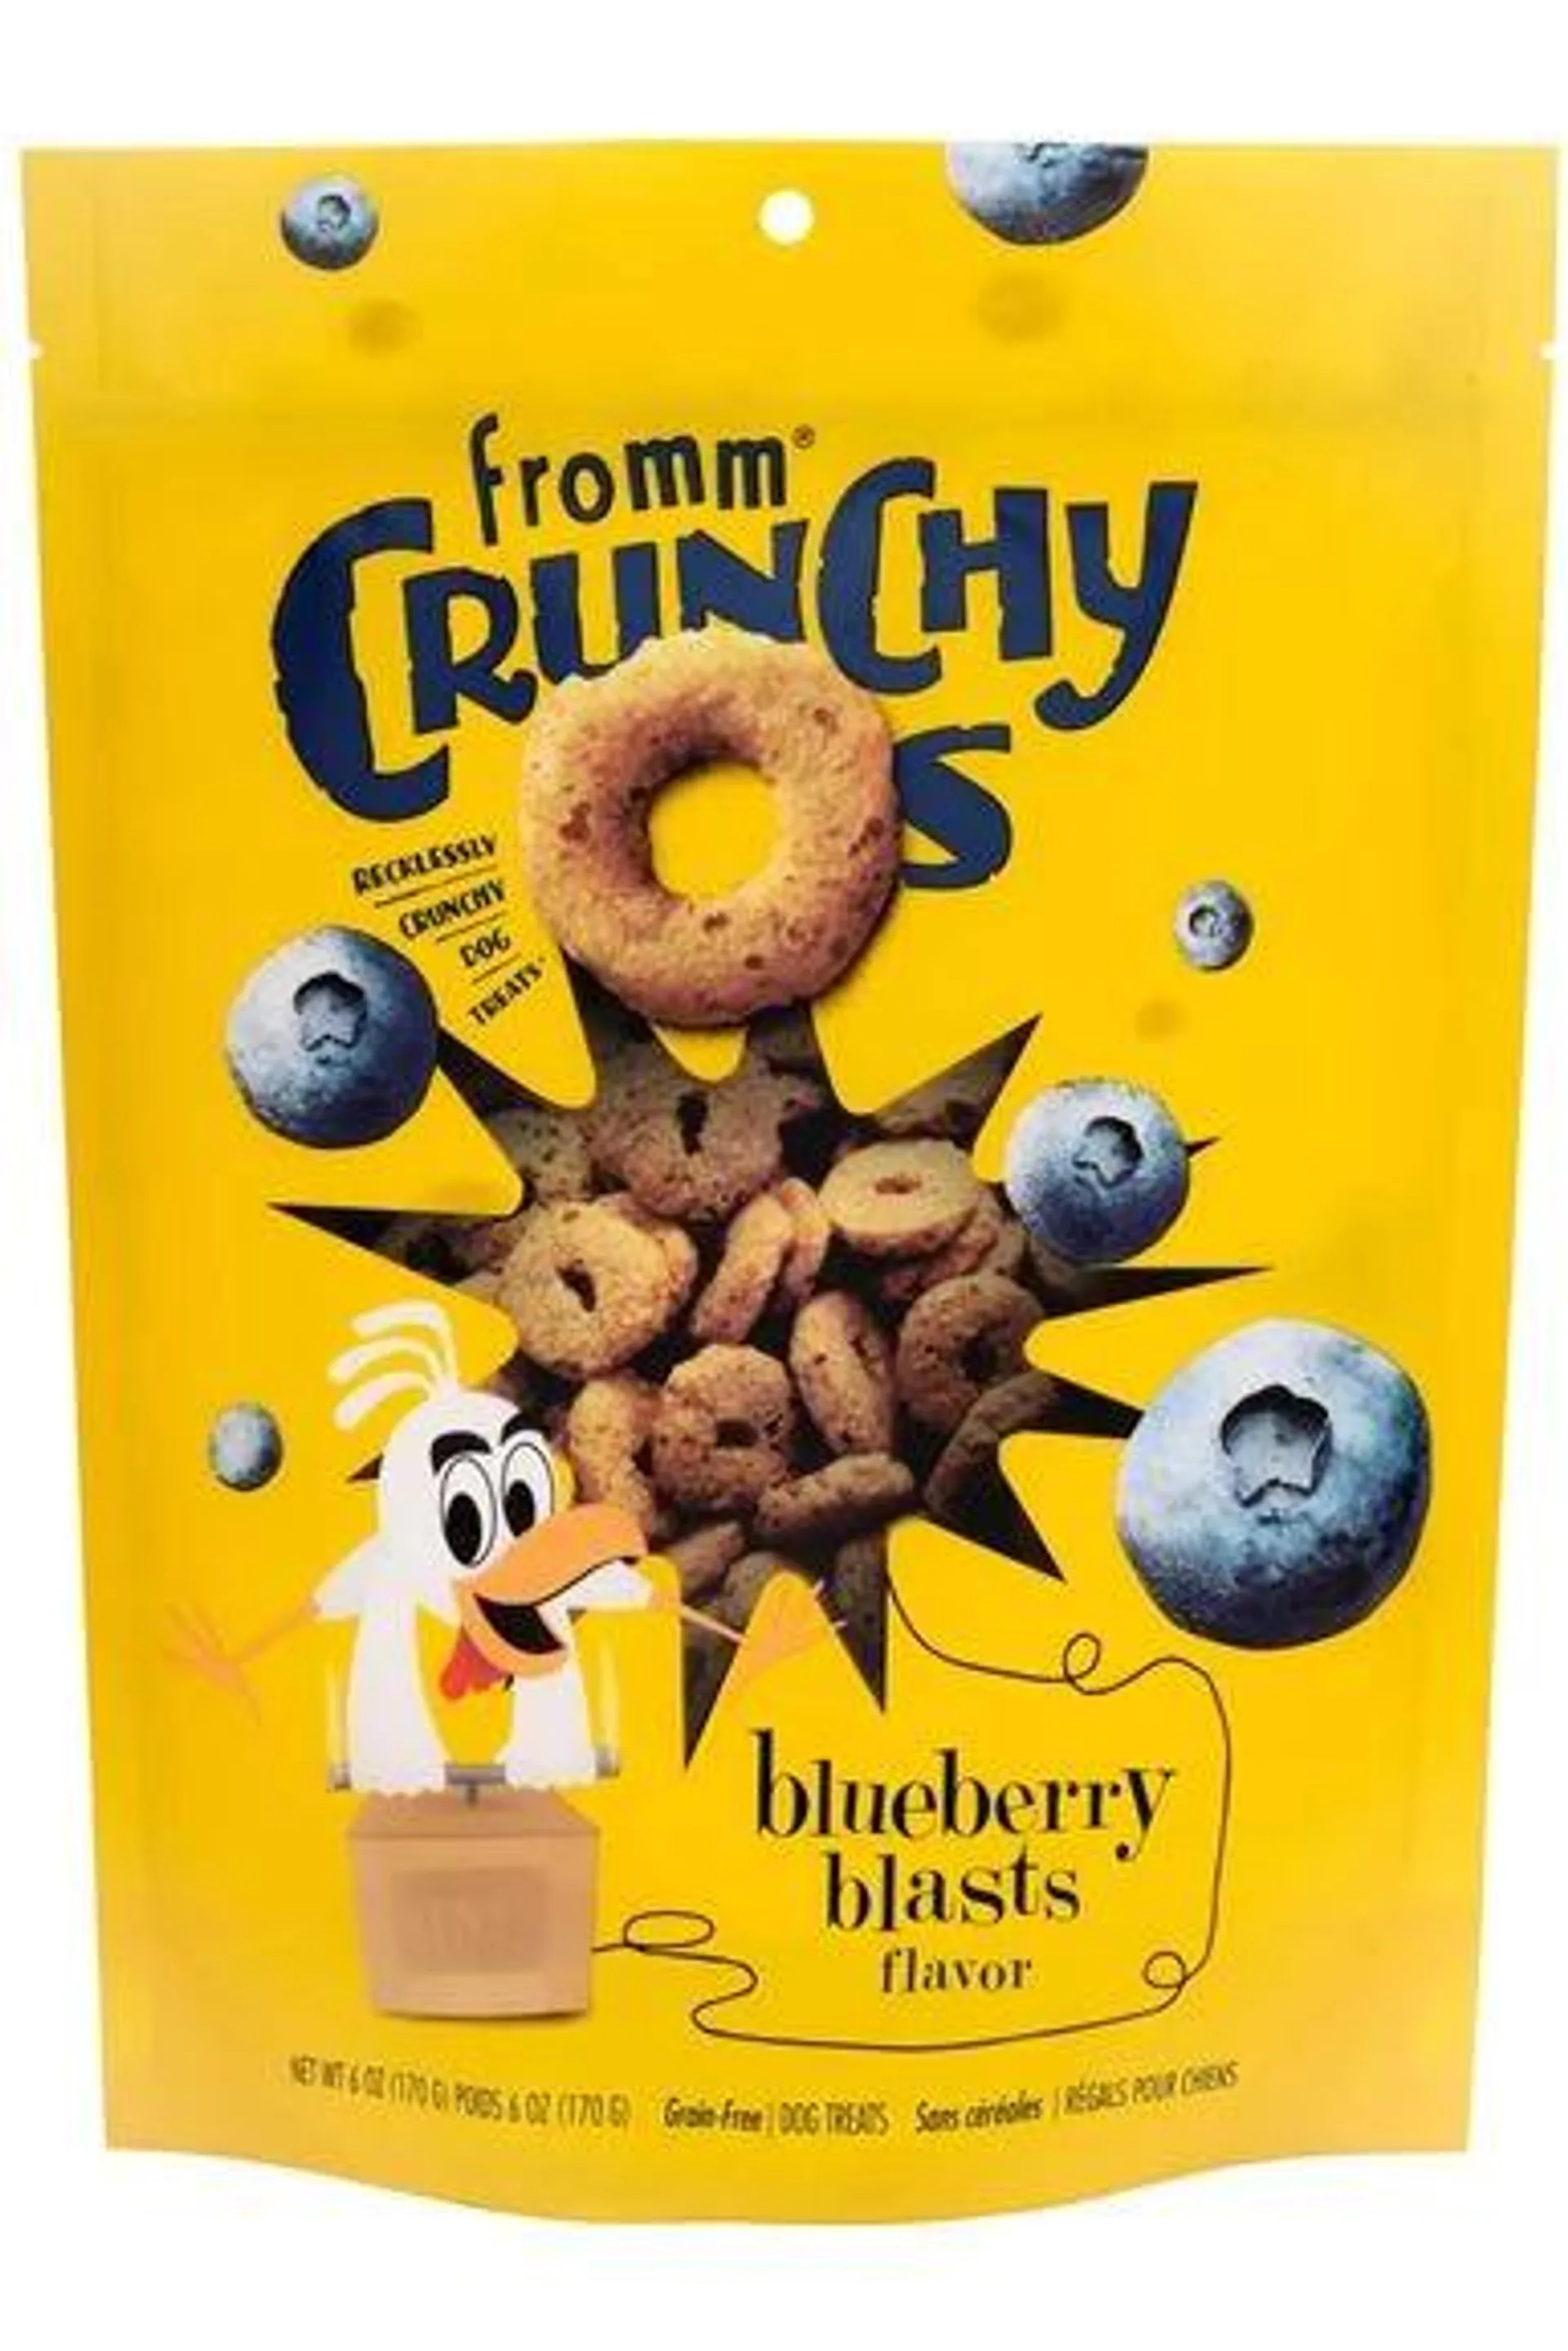 Fromm Crunchy Os® Blueberry Blasts Flavor Dog Treats, 6 Ounces